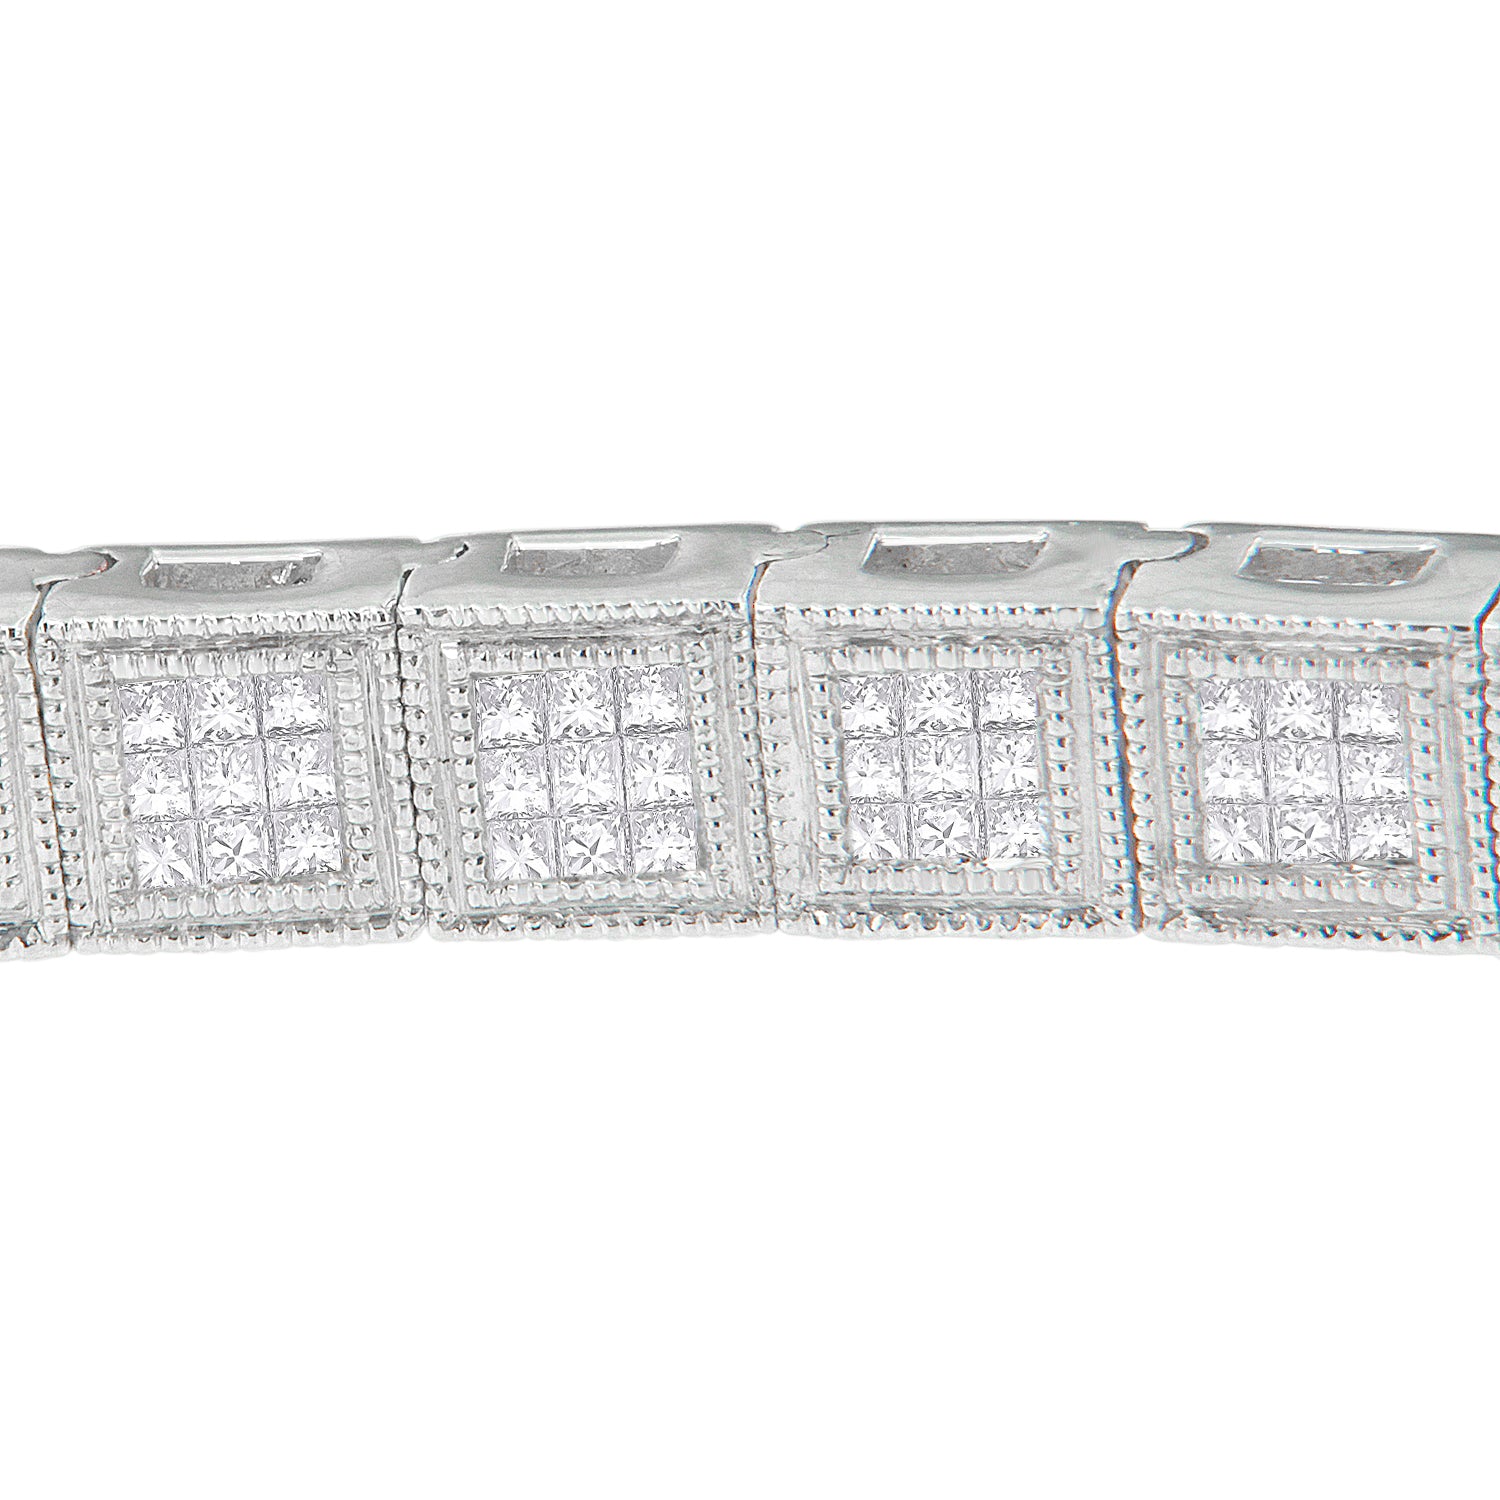 14K White Gold Princess Cut Diamond Cube Bracelet 2.86 cttw